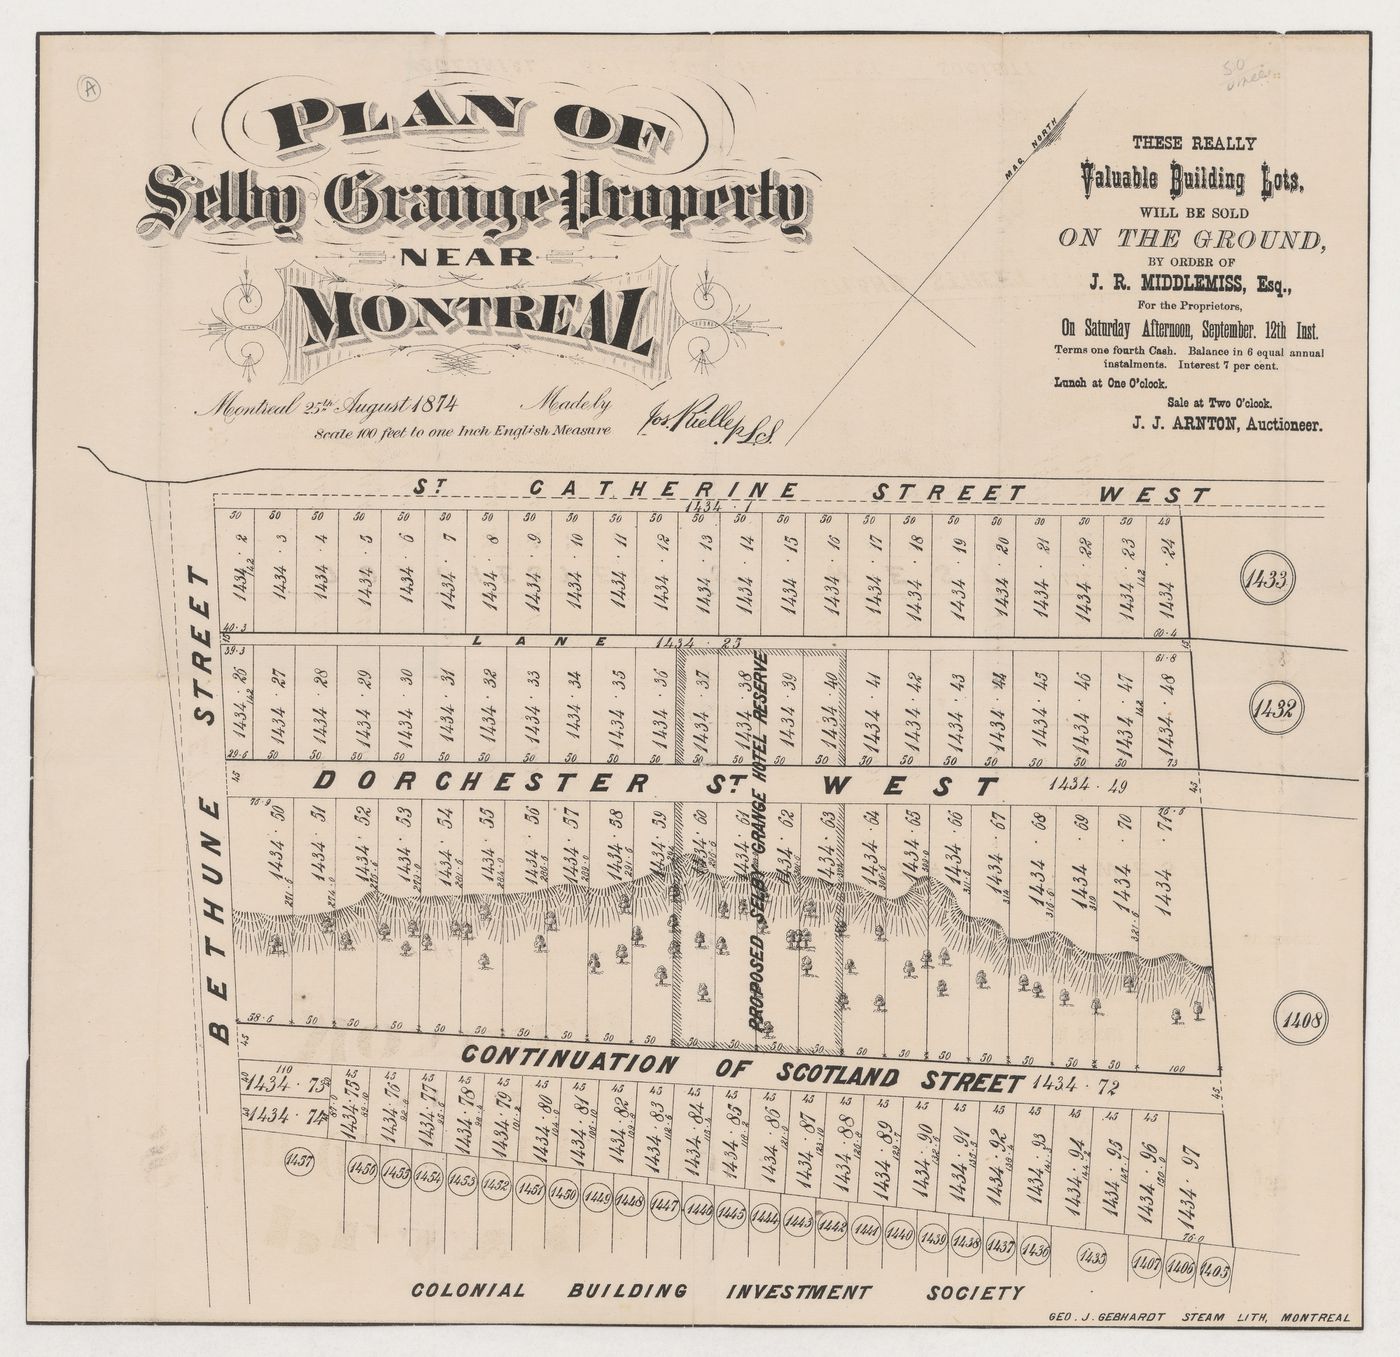 Plan of Selby Grange property, Montréal